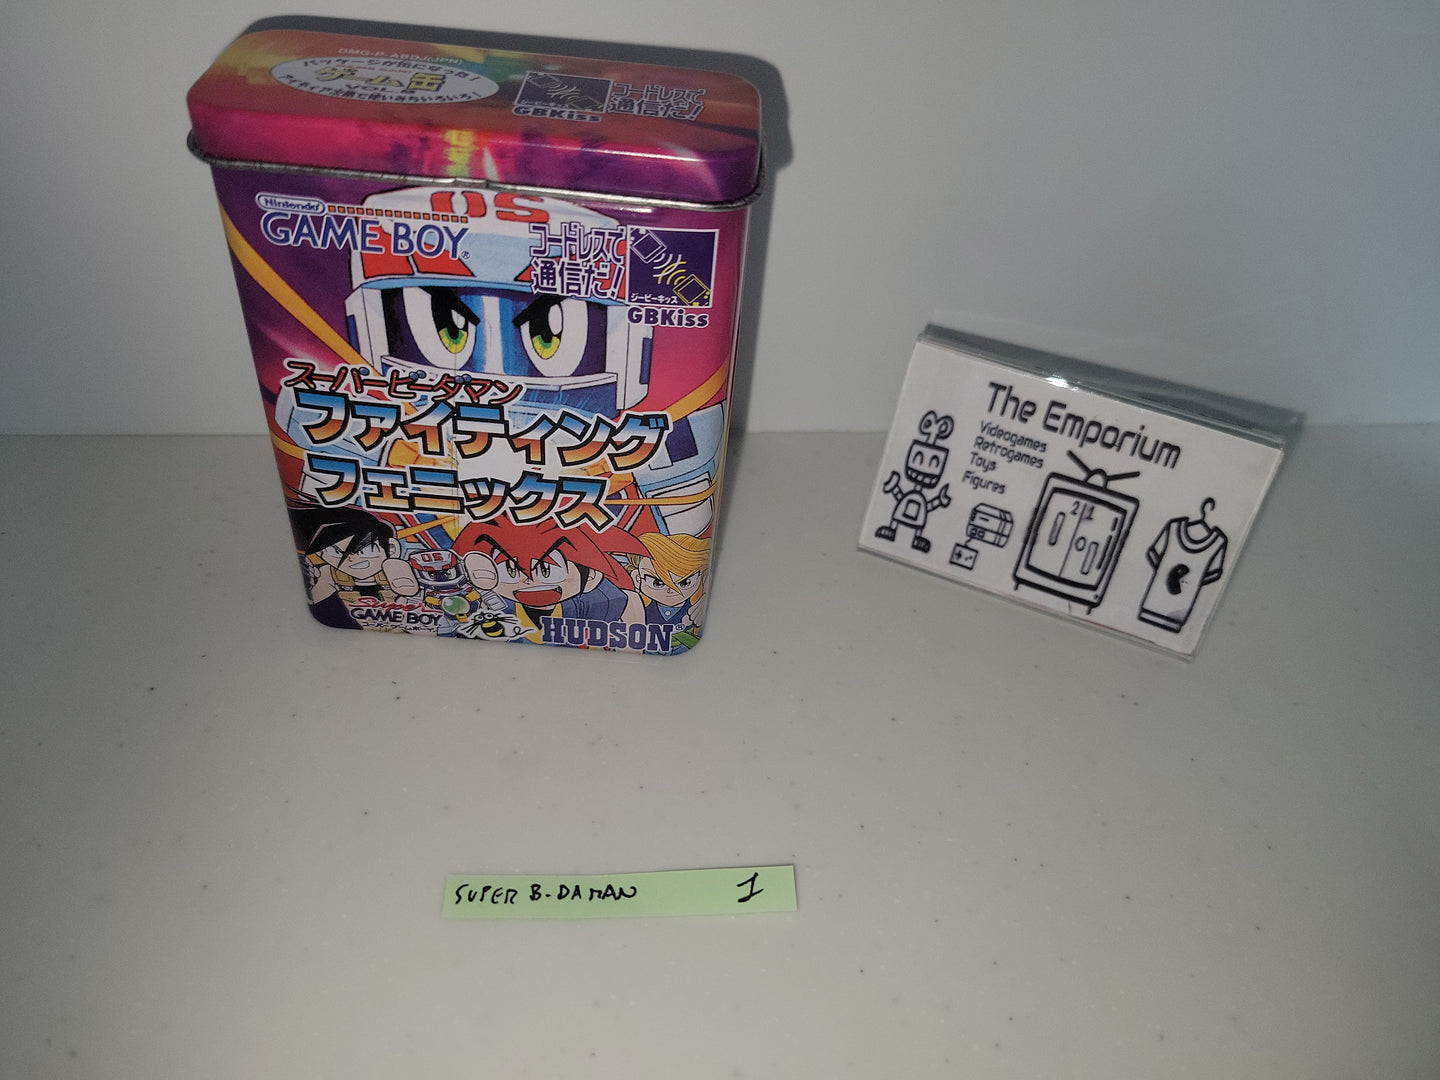 Super B-Daman: Fighting Phoenix - Nintendo GB GameBoy